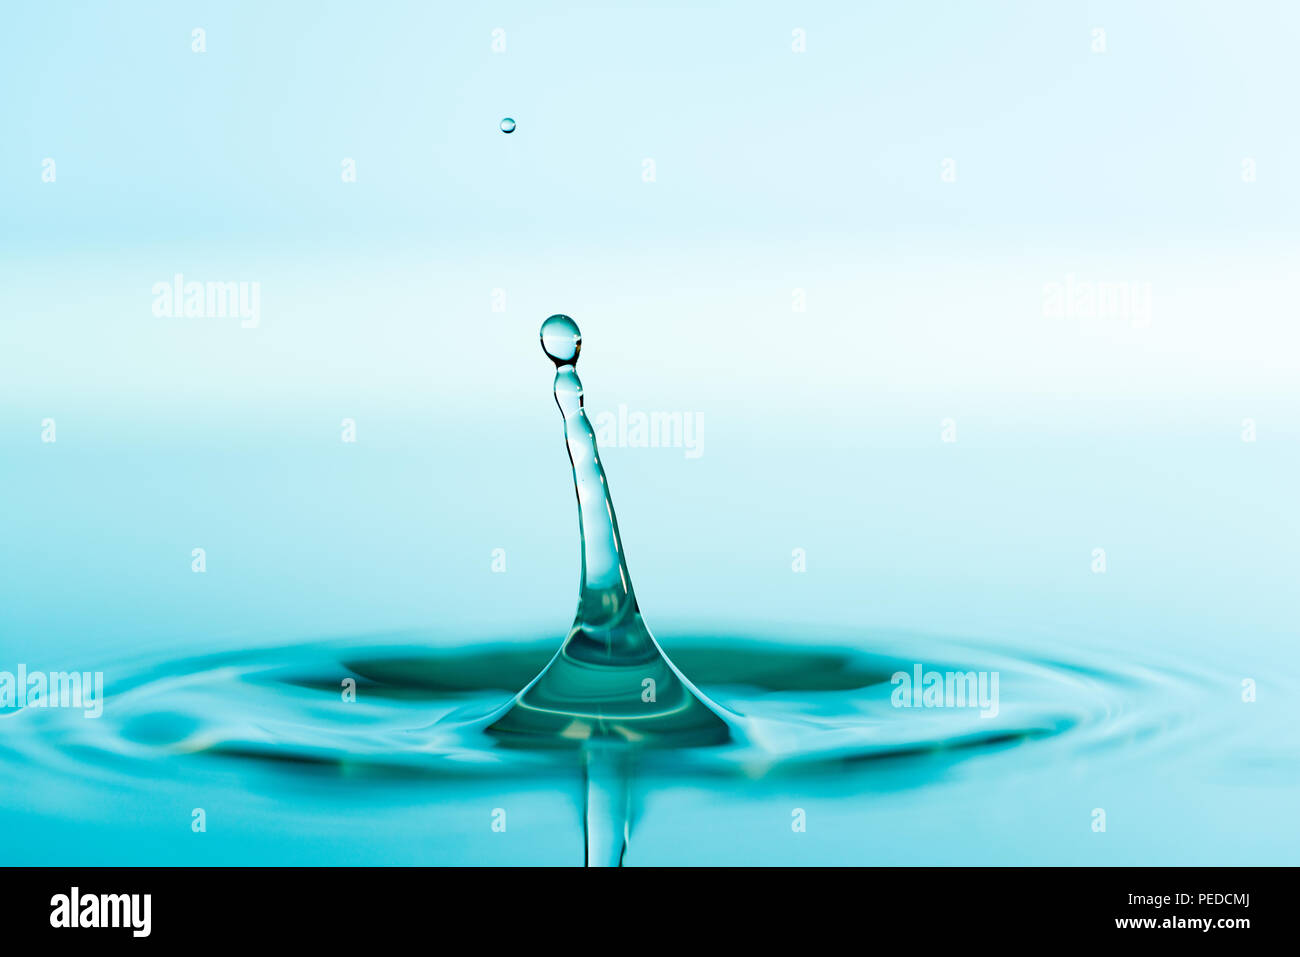 https://c8.alamy.com/comp/PEDCMJ/splash-of-the-falling-drops-of-water-PEDCMJ.jpg